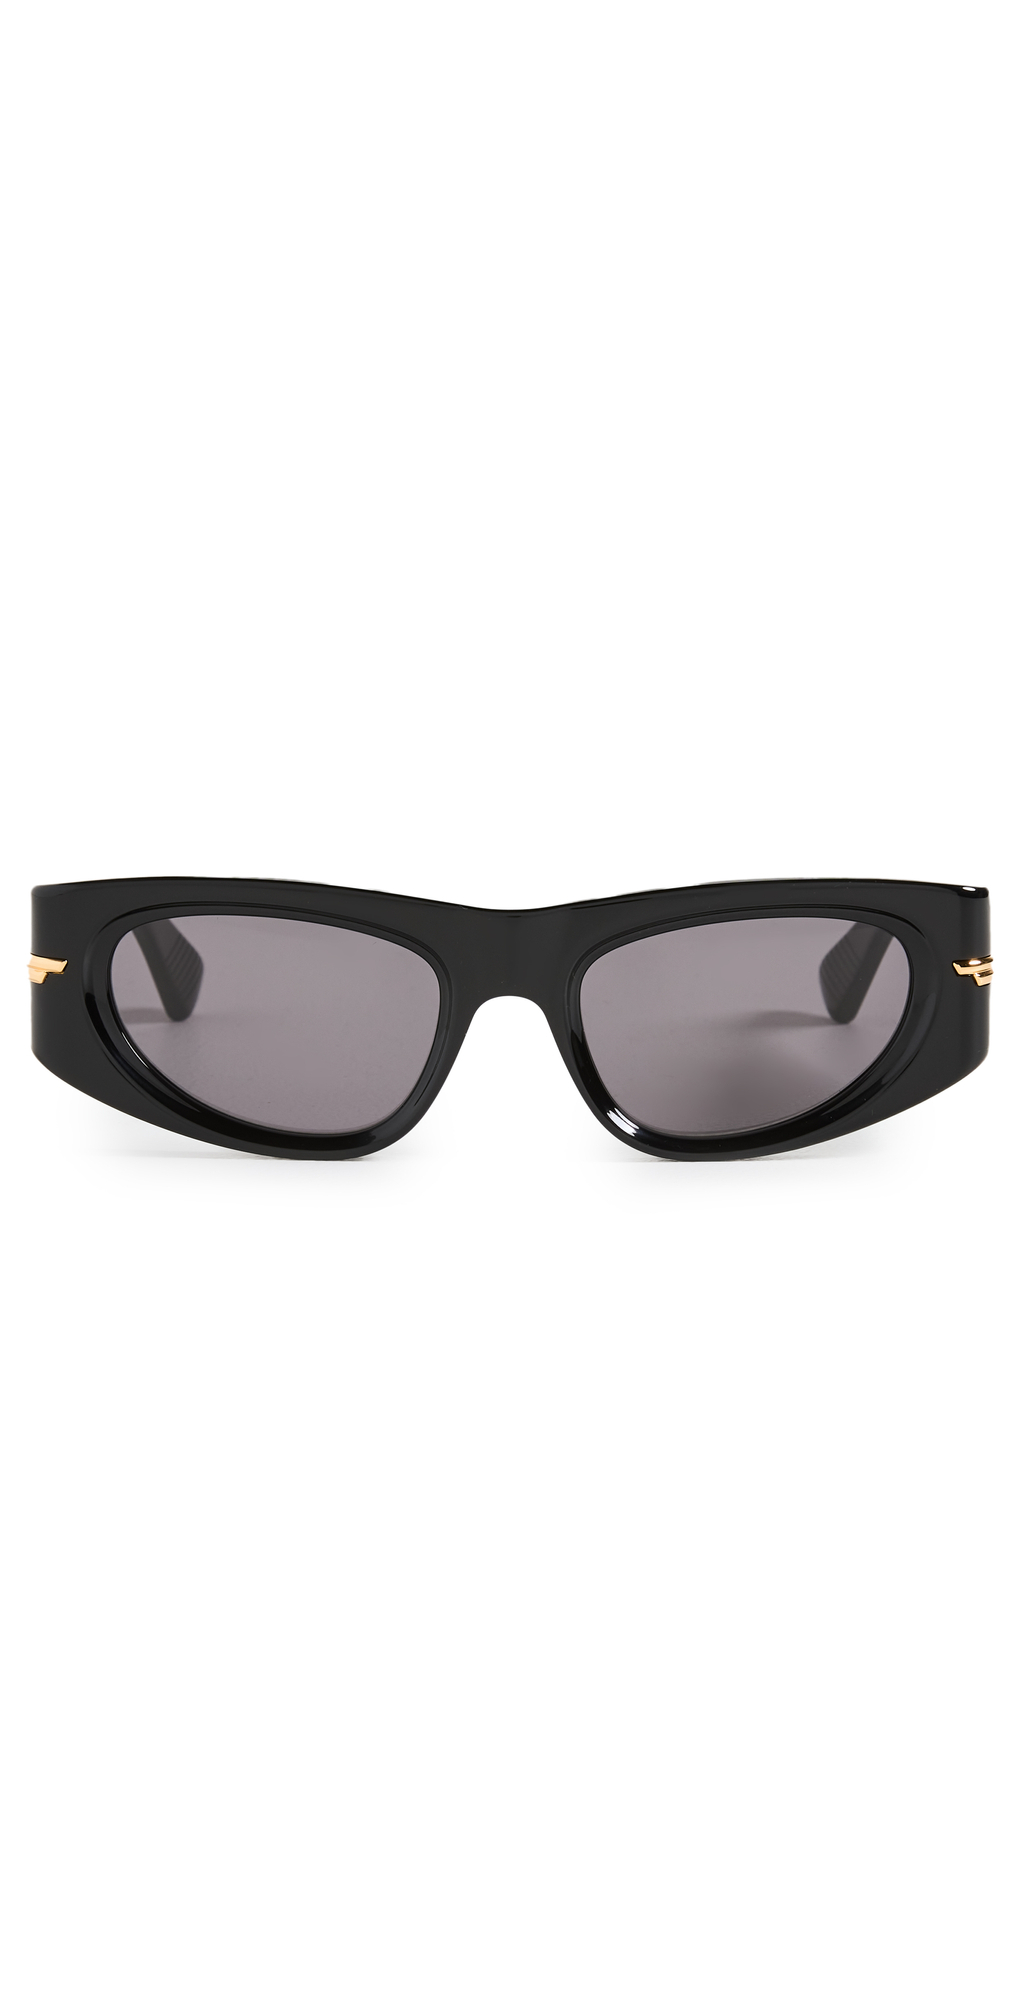 Bottega Veneta Original Sunglasses in black / grey